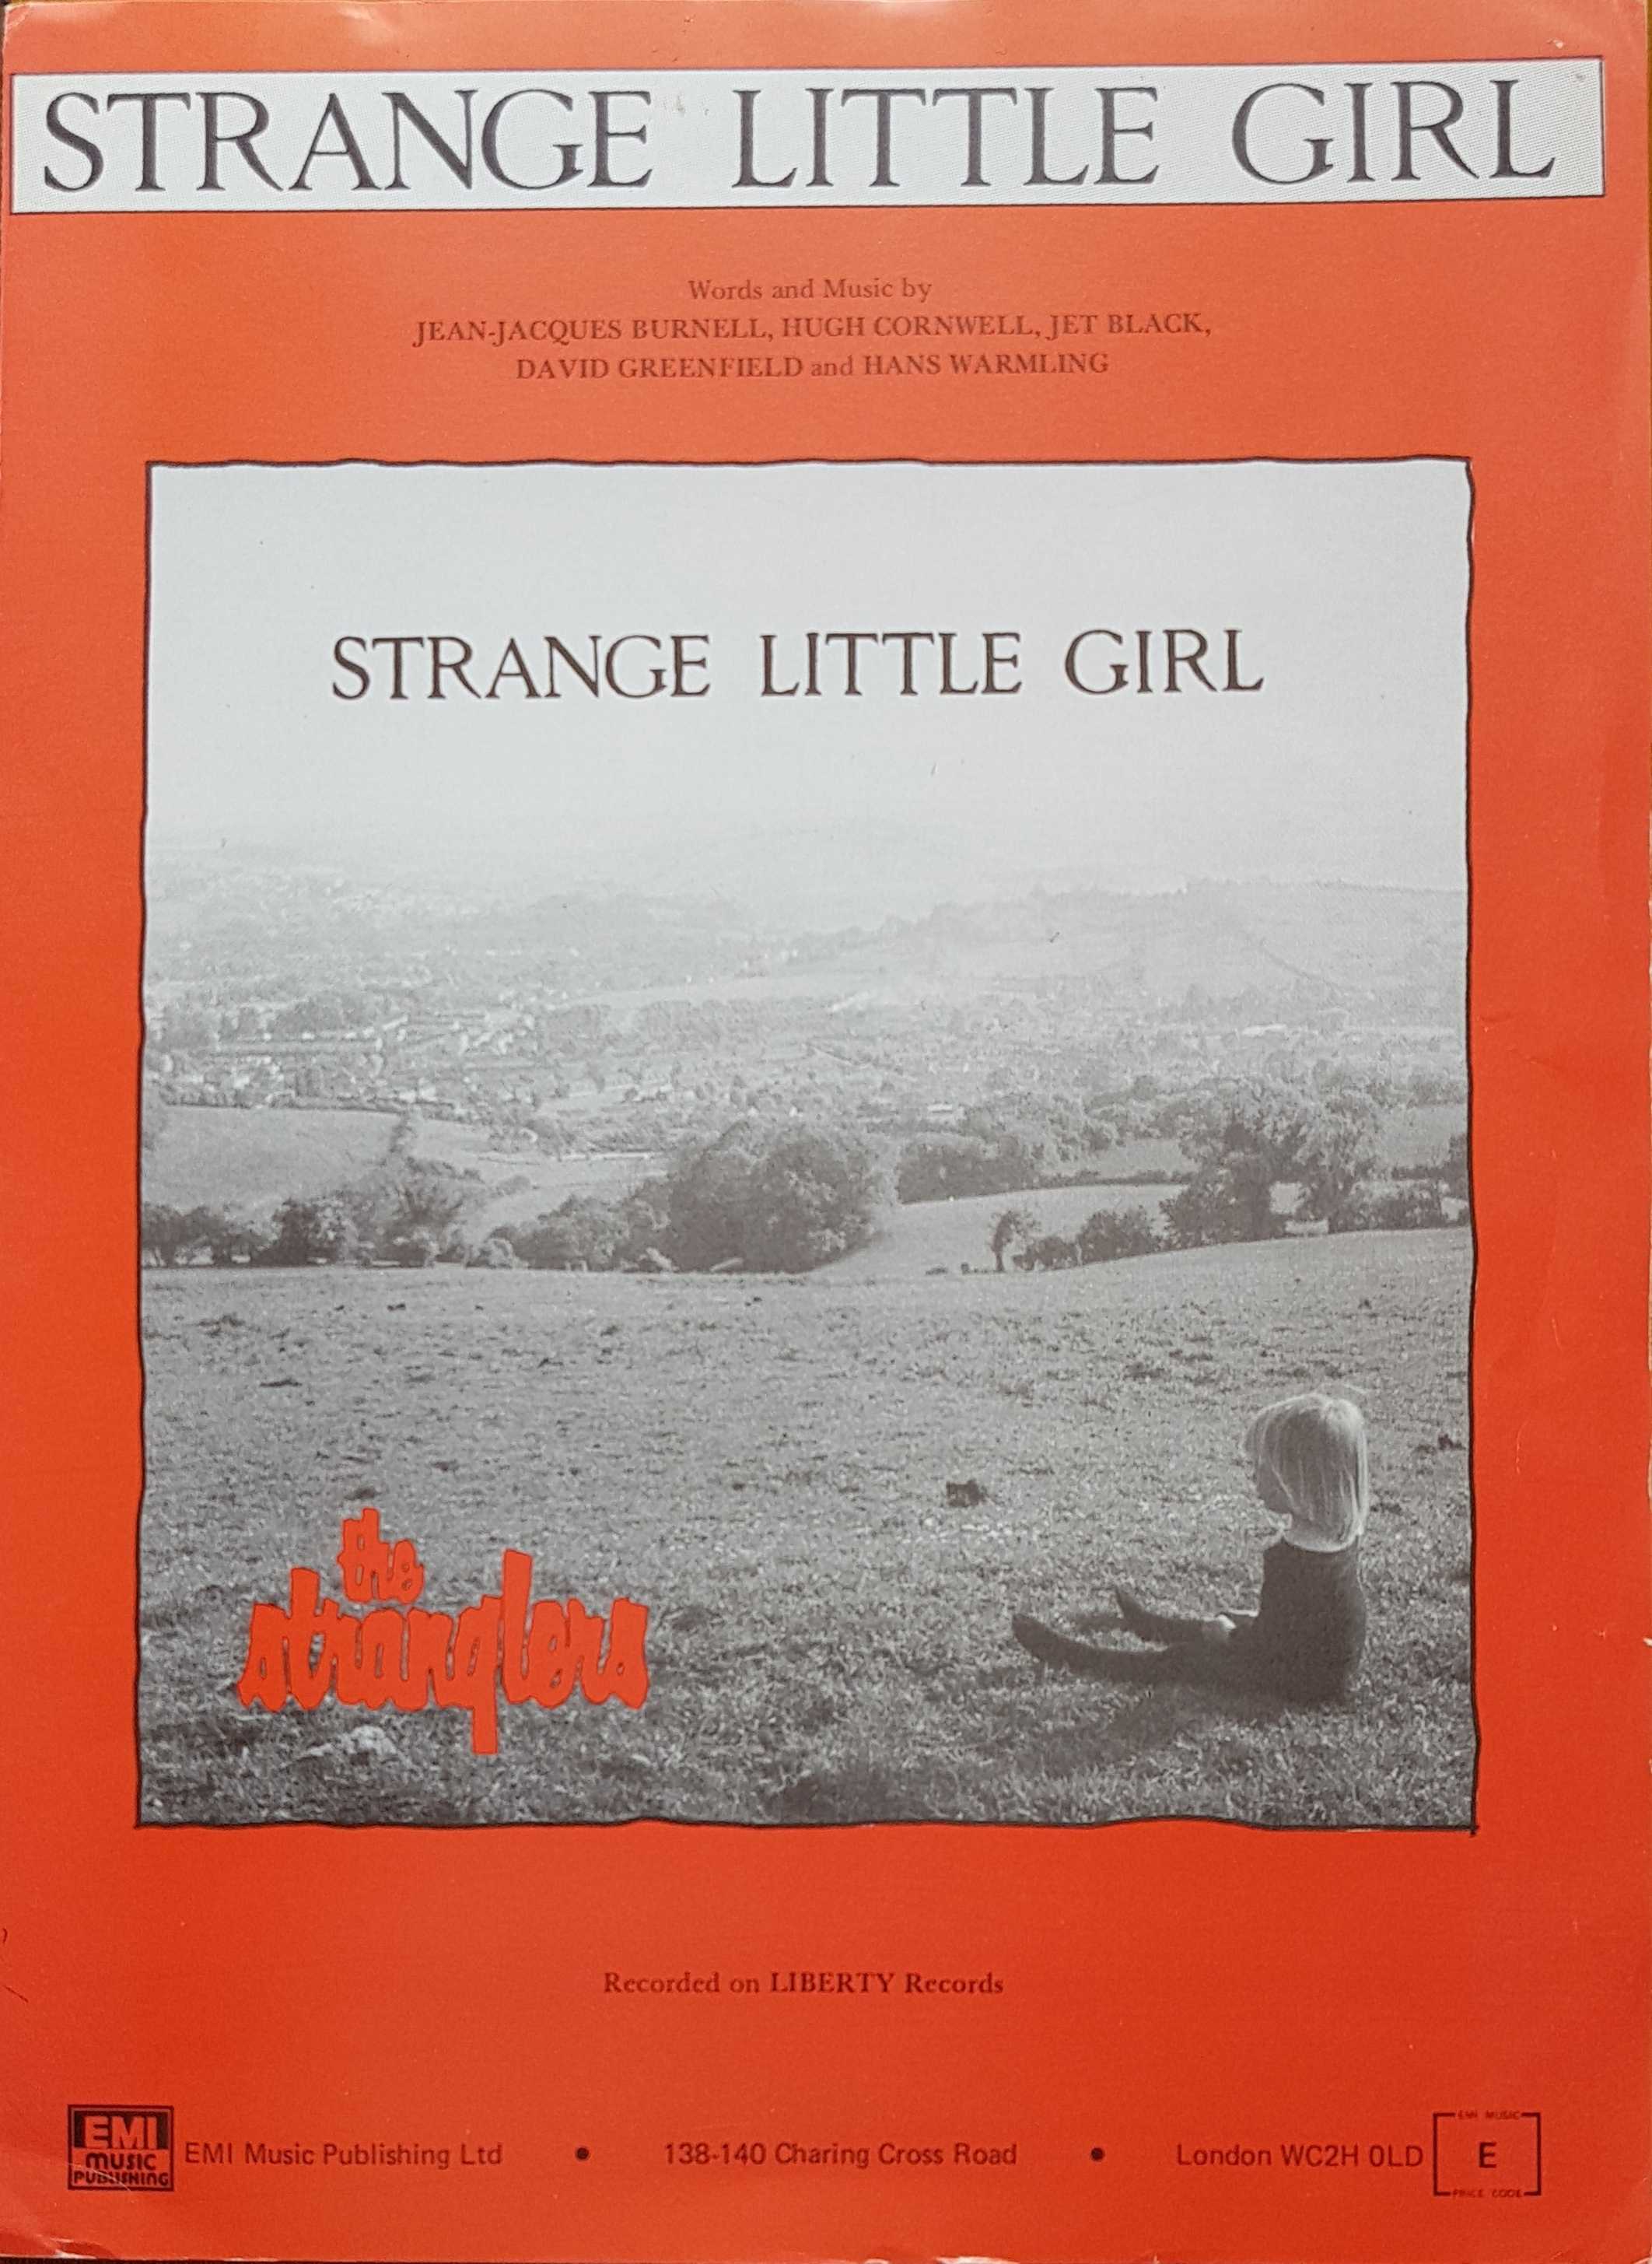 Picture of Strange little girl by artist The Stranglers  from The Stranglers books